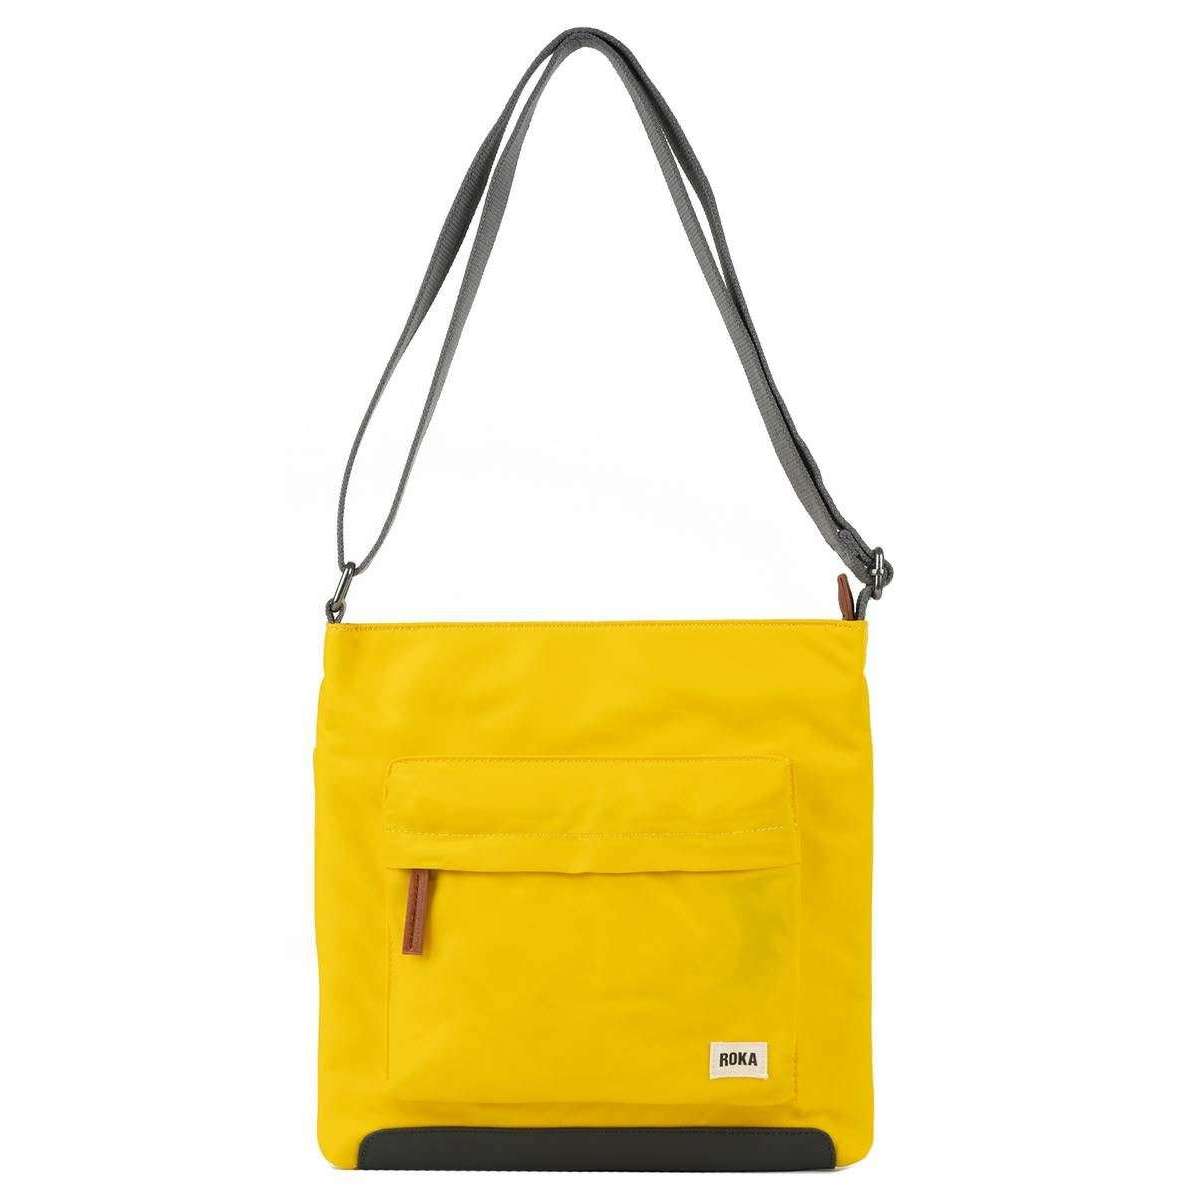 Roka Kennington B Medium Sustainable Nylon Cross Body Bag - Mustard Yellow